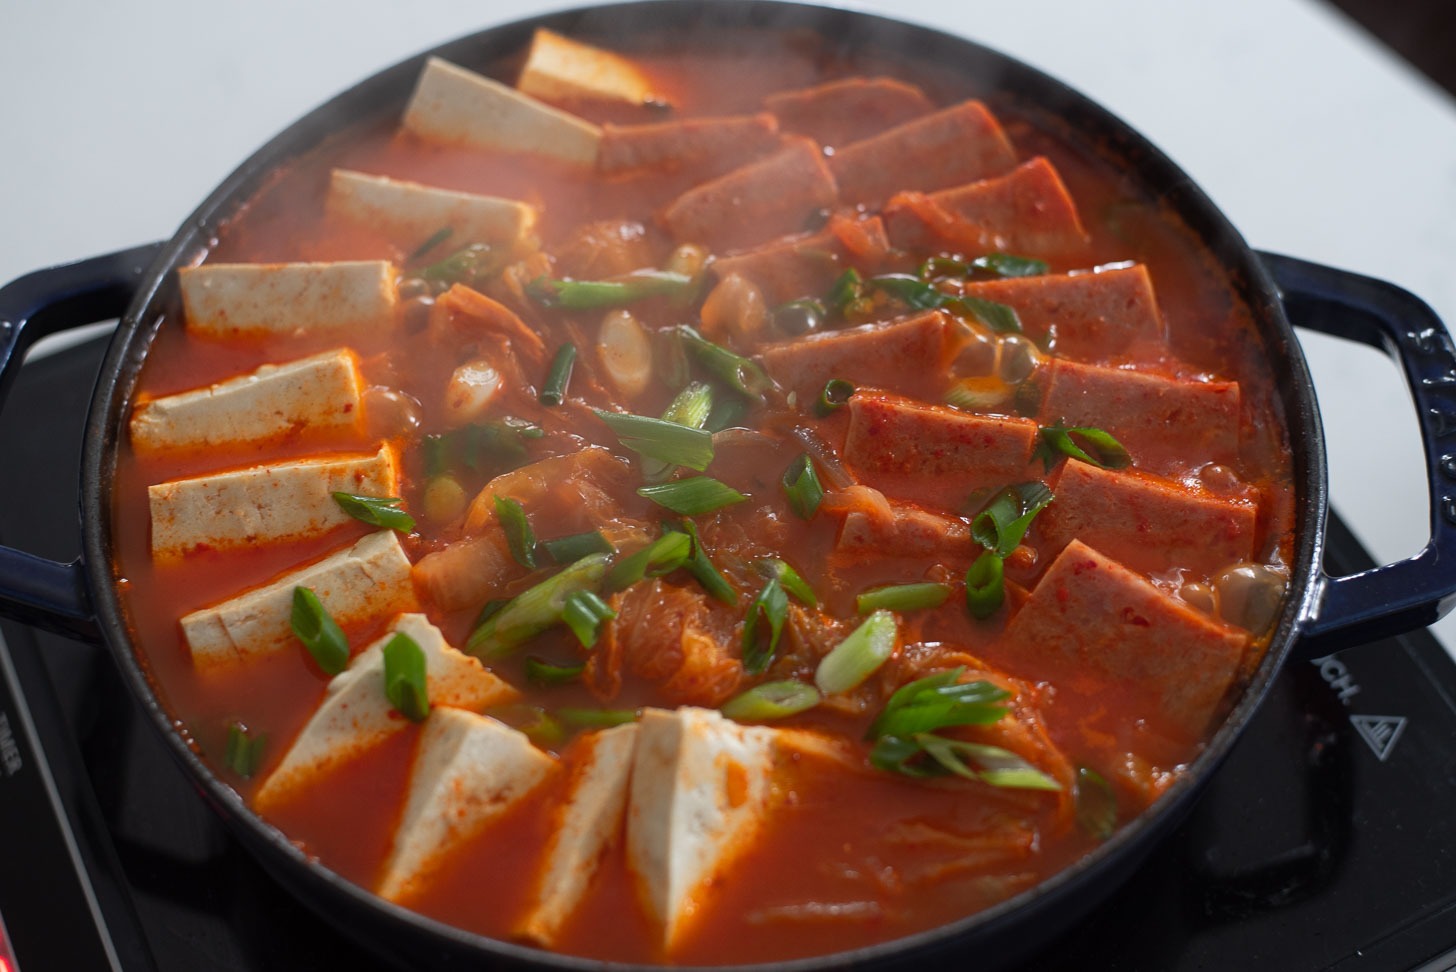 Tofu slices added in Spam kimchi jjigae.